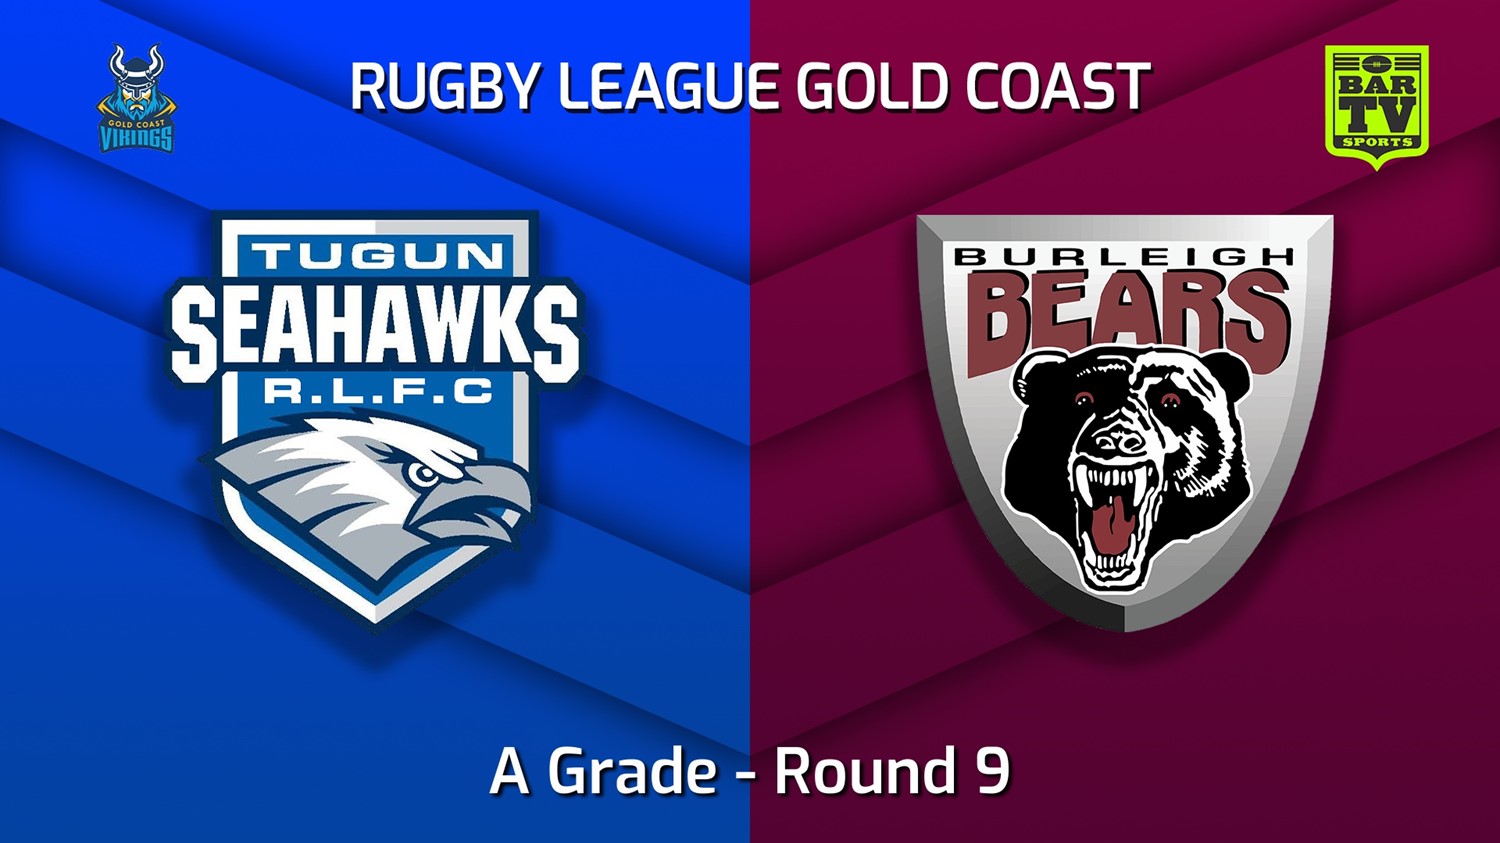 220604-Gold Coast Round 9 - A Grade - Tugun Seahawks v Burleigh Bears Slate Image